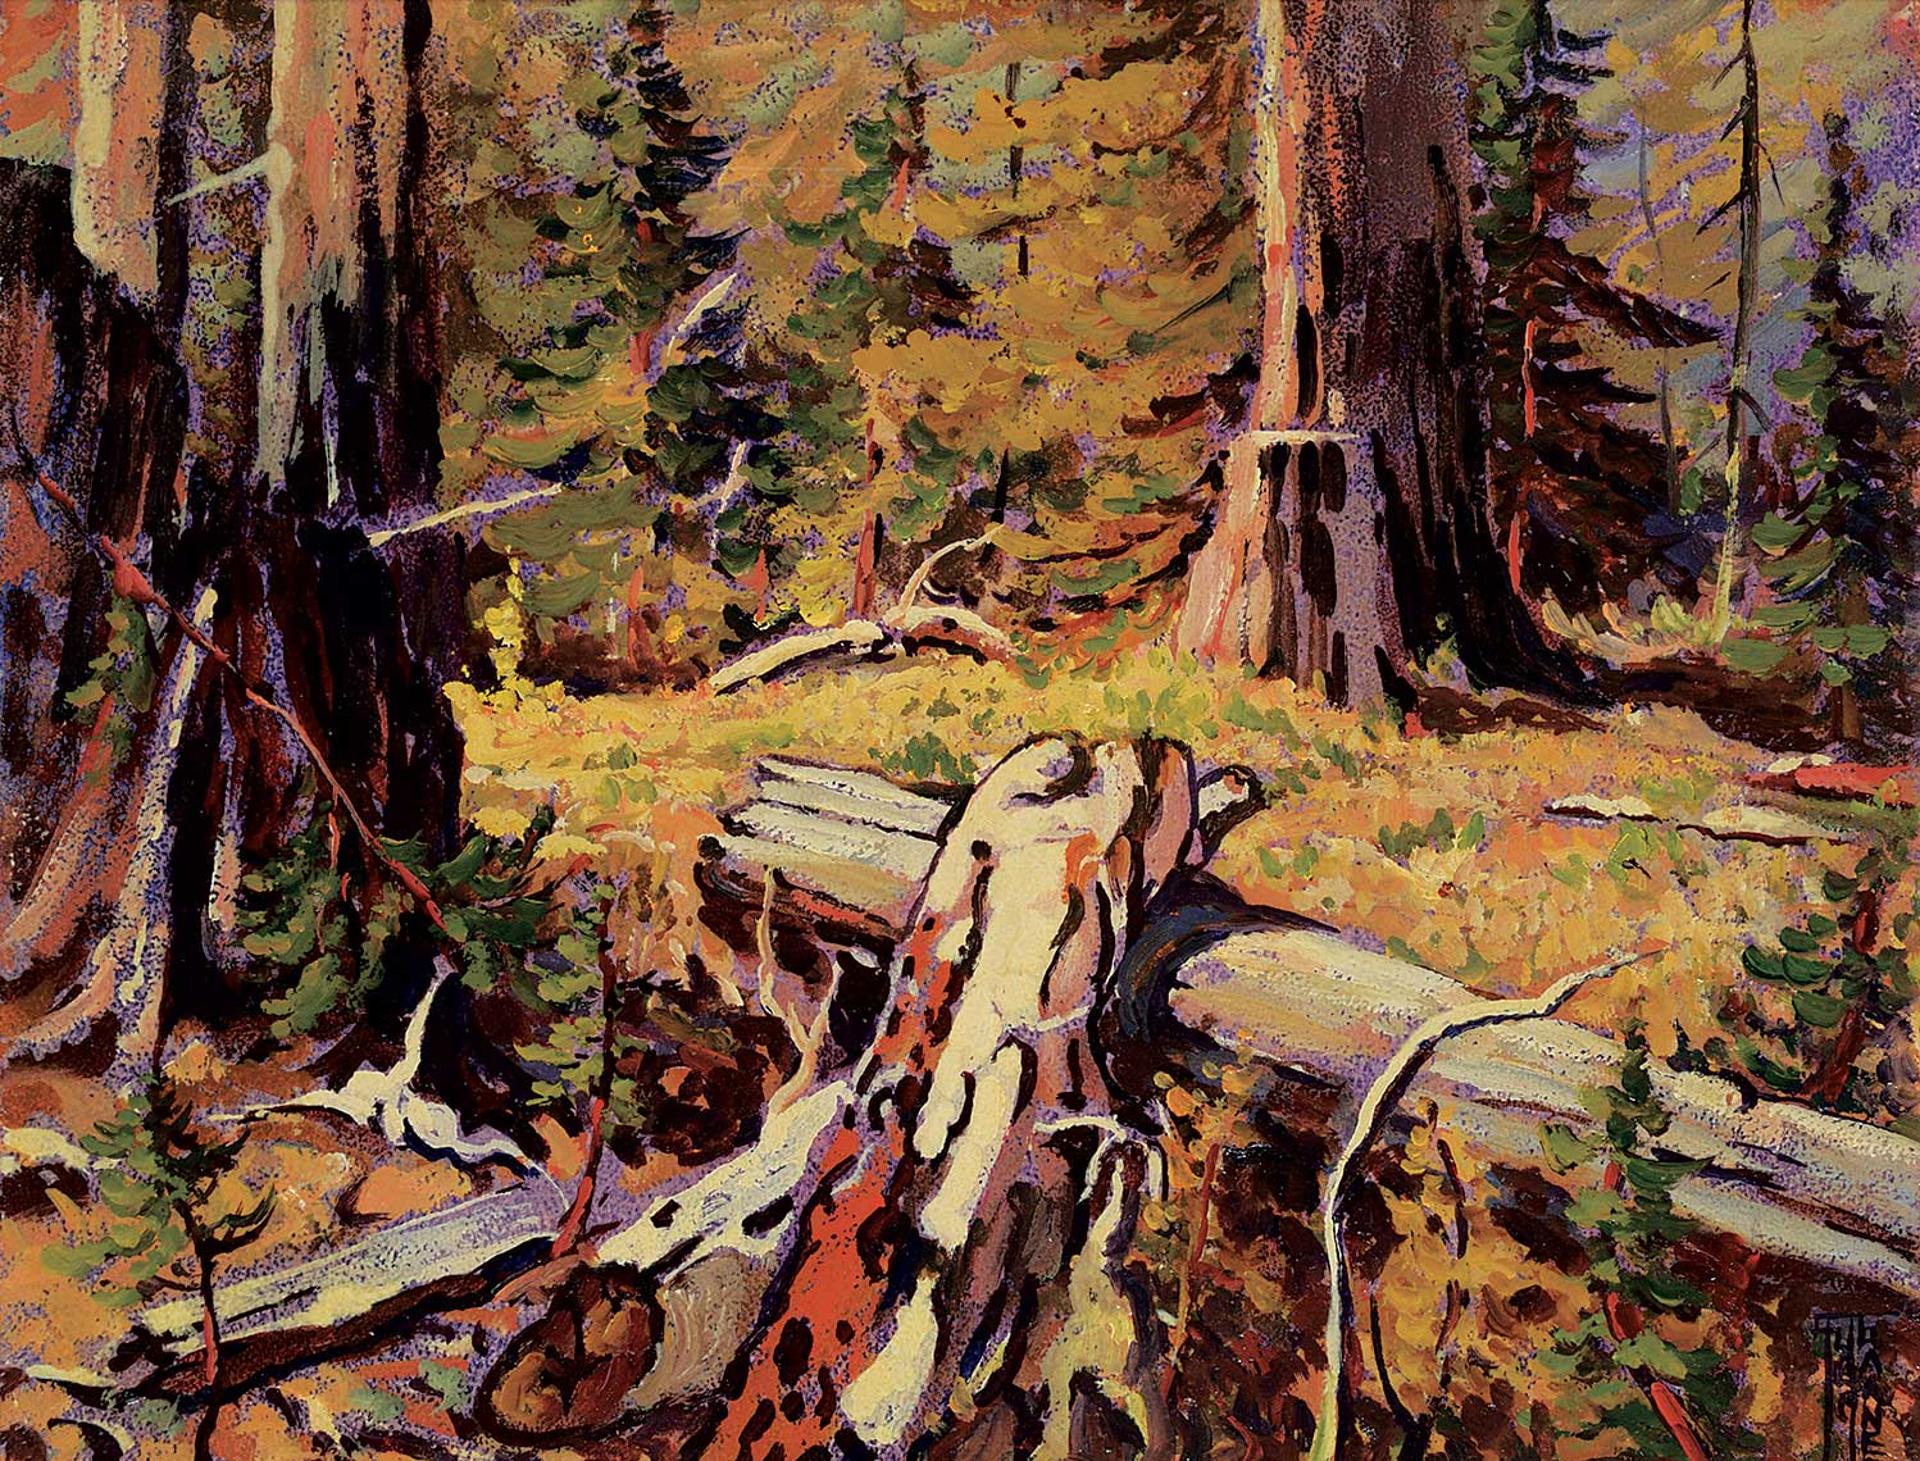 Alec John Garner (1897-1995) - Fallen Logs